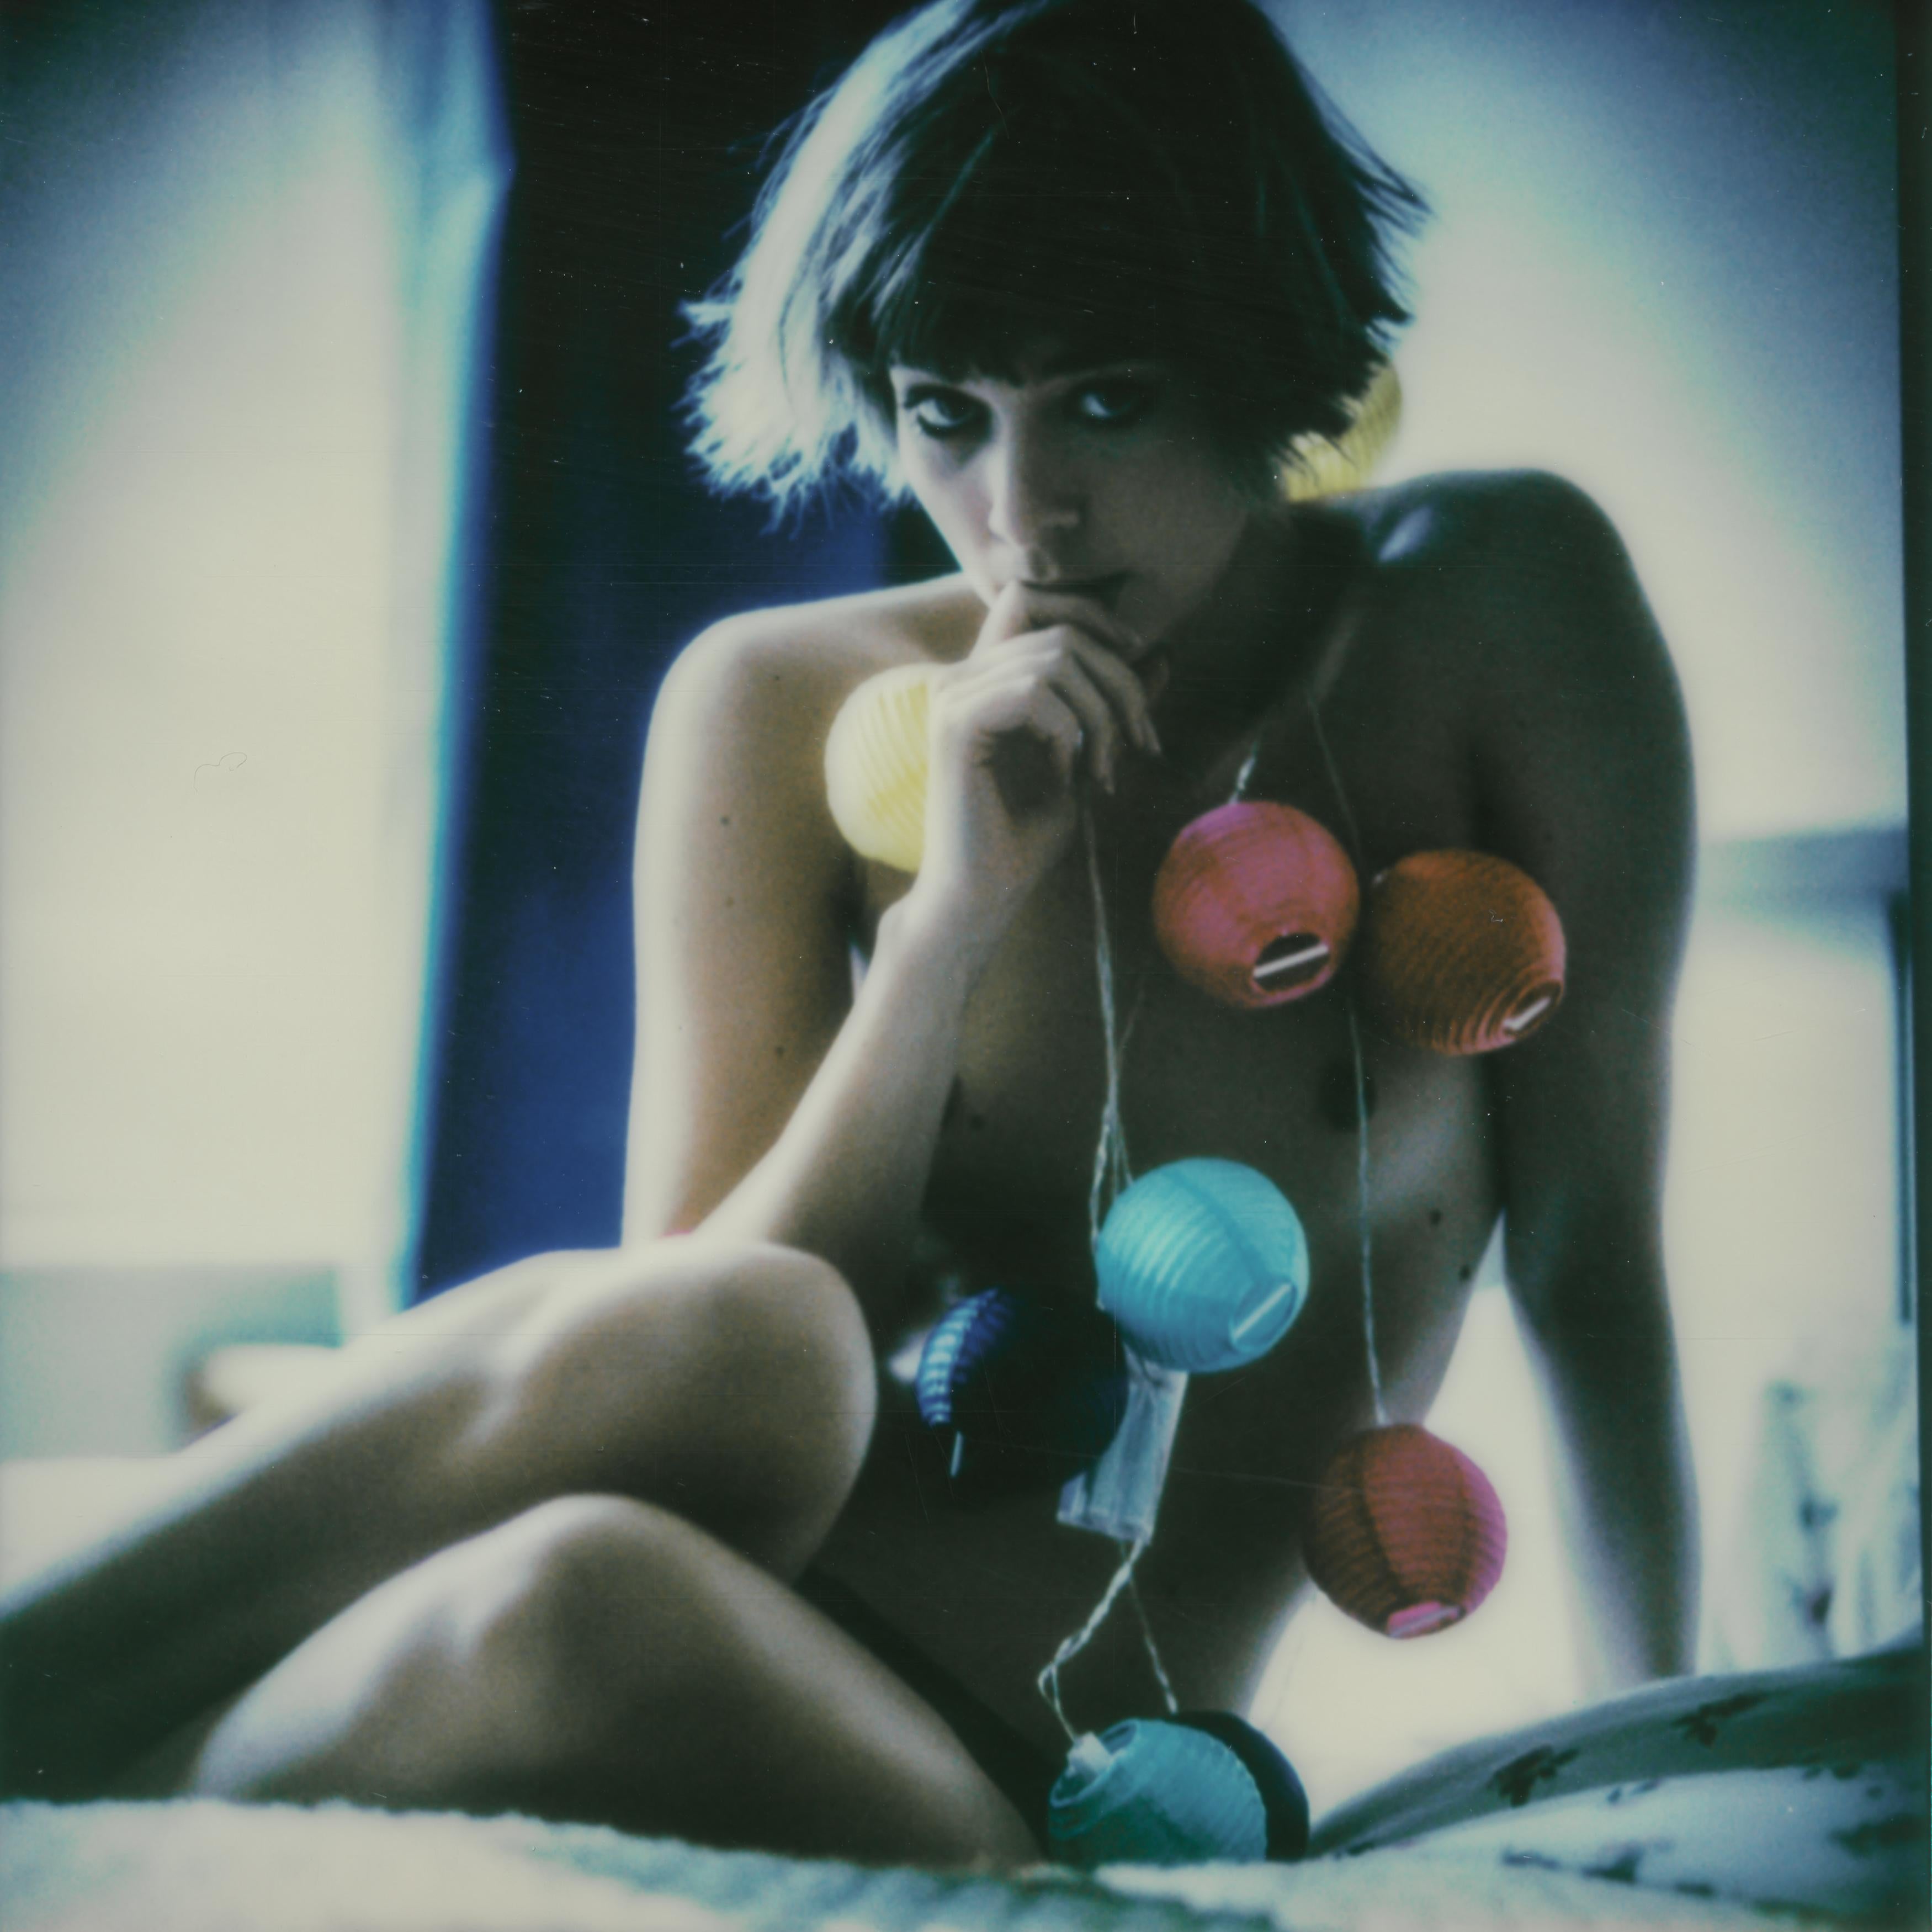 Kirsten Thys van den Audenaerde Nude Photograph - Read my mind - Polaroid, Color, Women, 21st Century, Nude